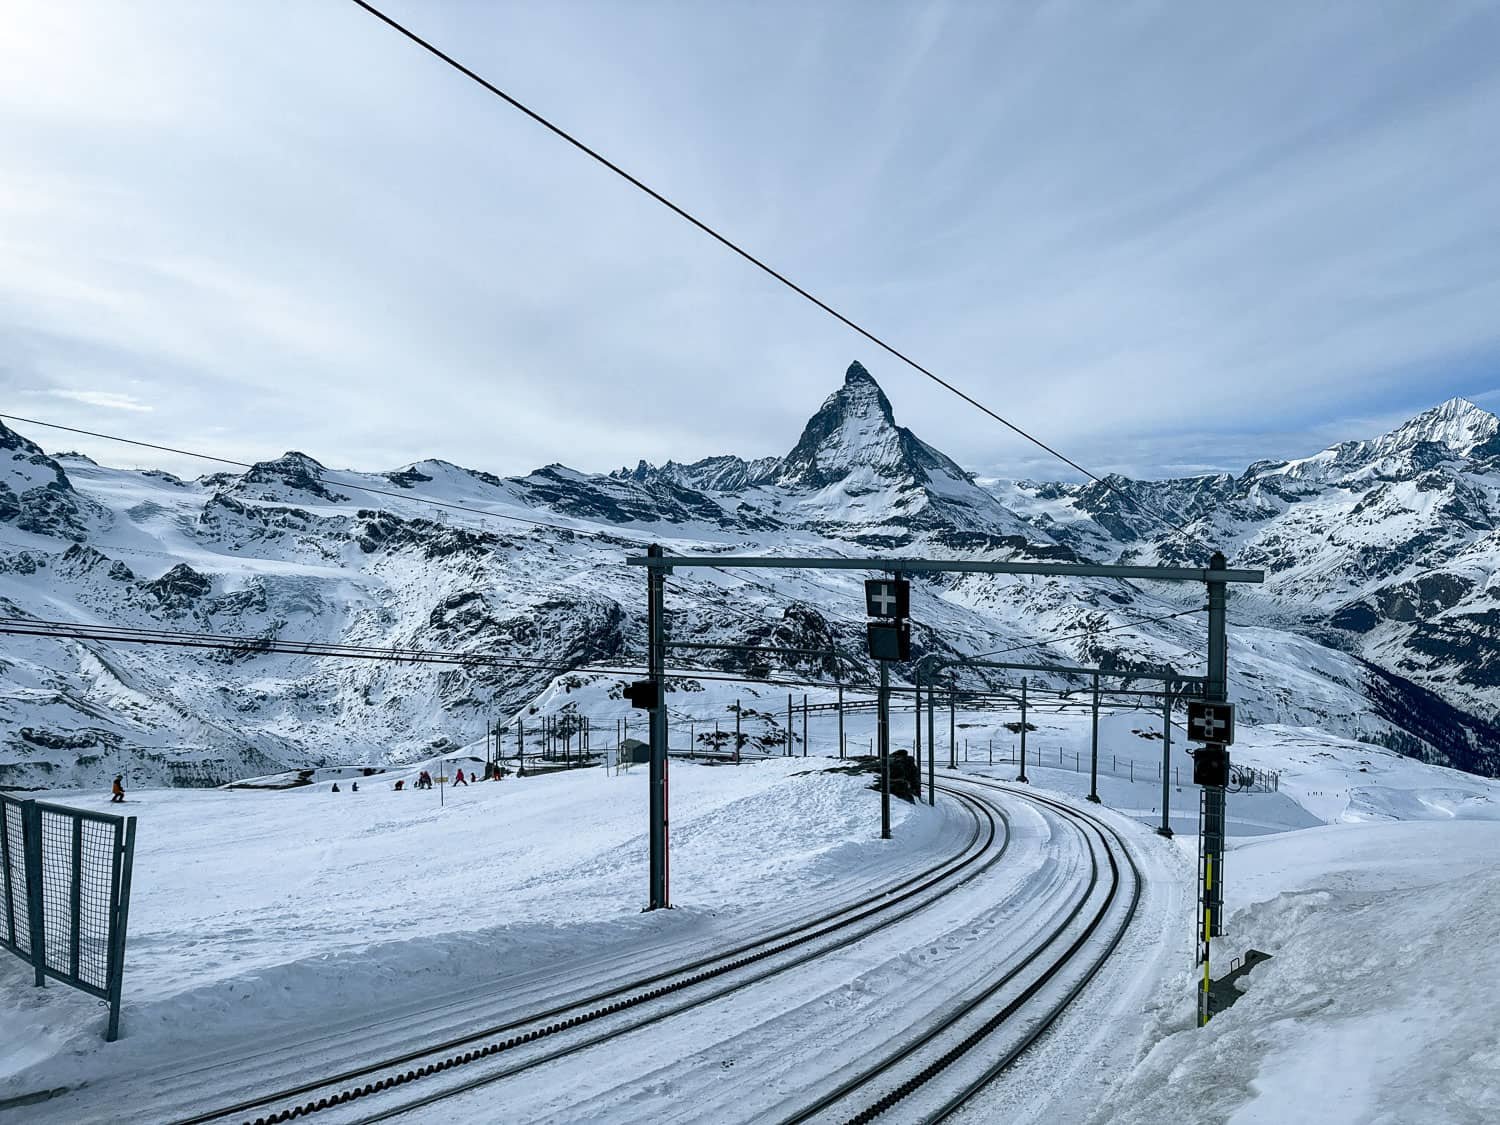 Gornergrat Railway with the iconic Matterhorn in the background